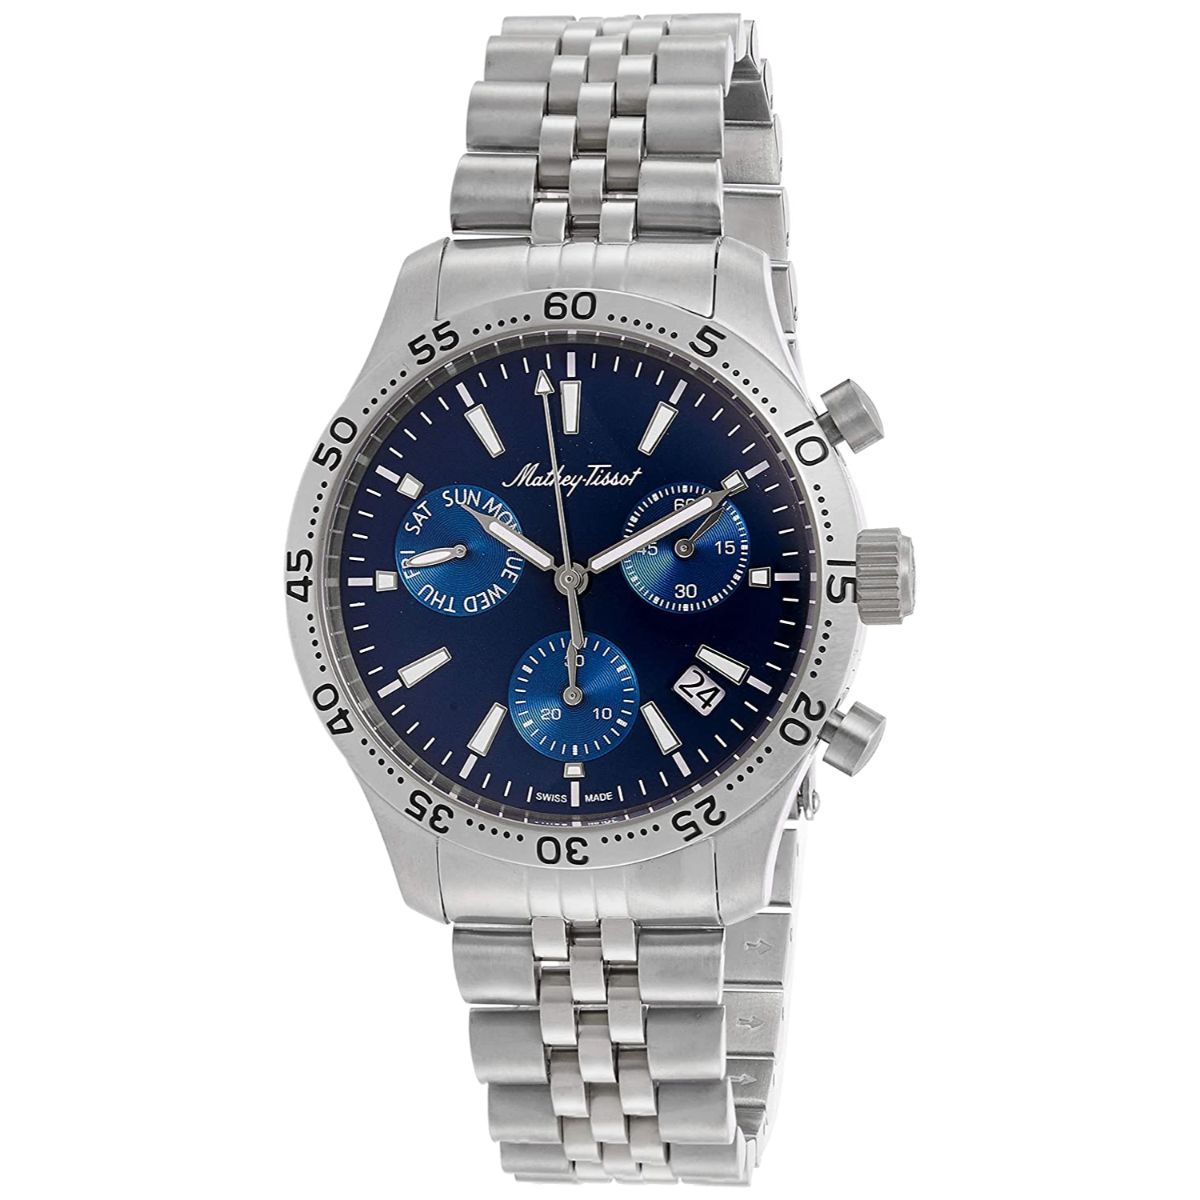 Mathey-Tissot Blue Dial Chronograph Watches For Men - H1822CHBBU